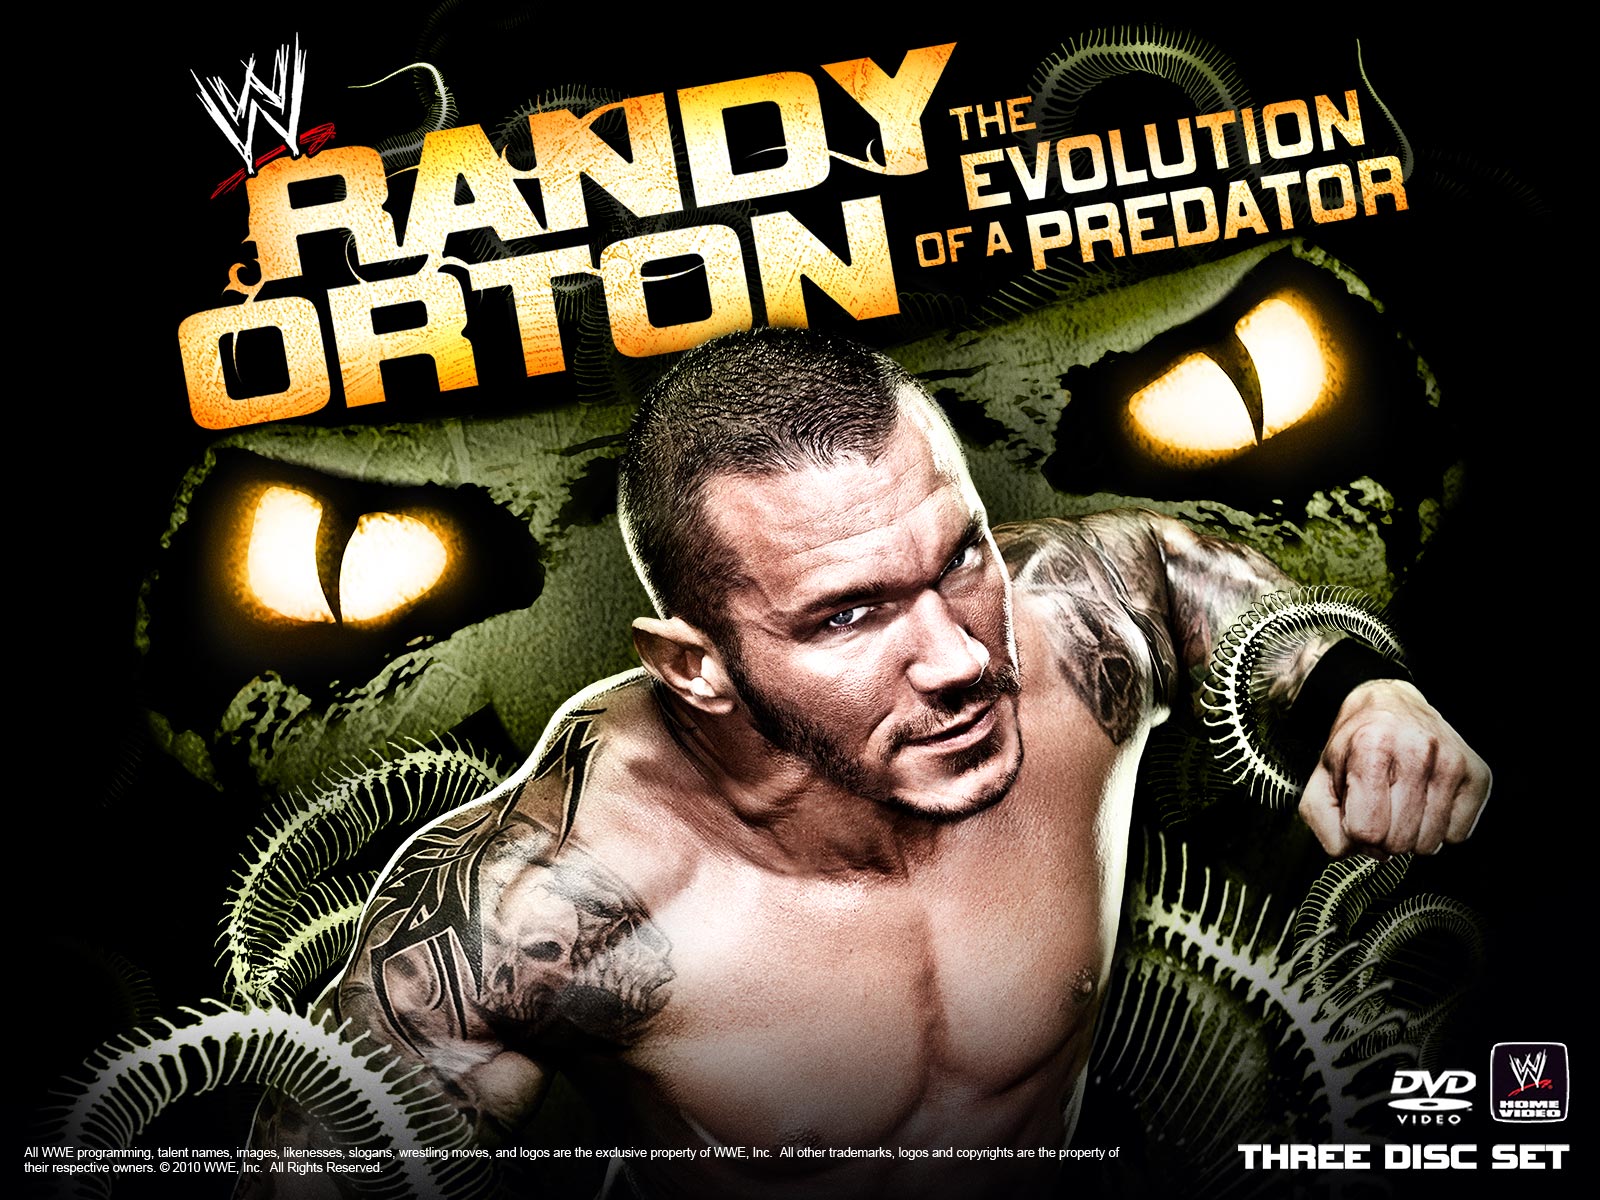 Wwe releases wallpaper of randy orton evolution of a predator dvd wrestling dvd network